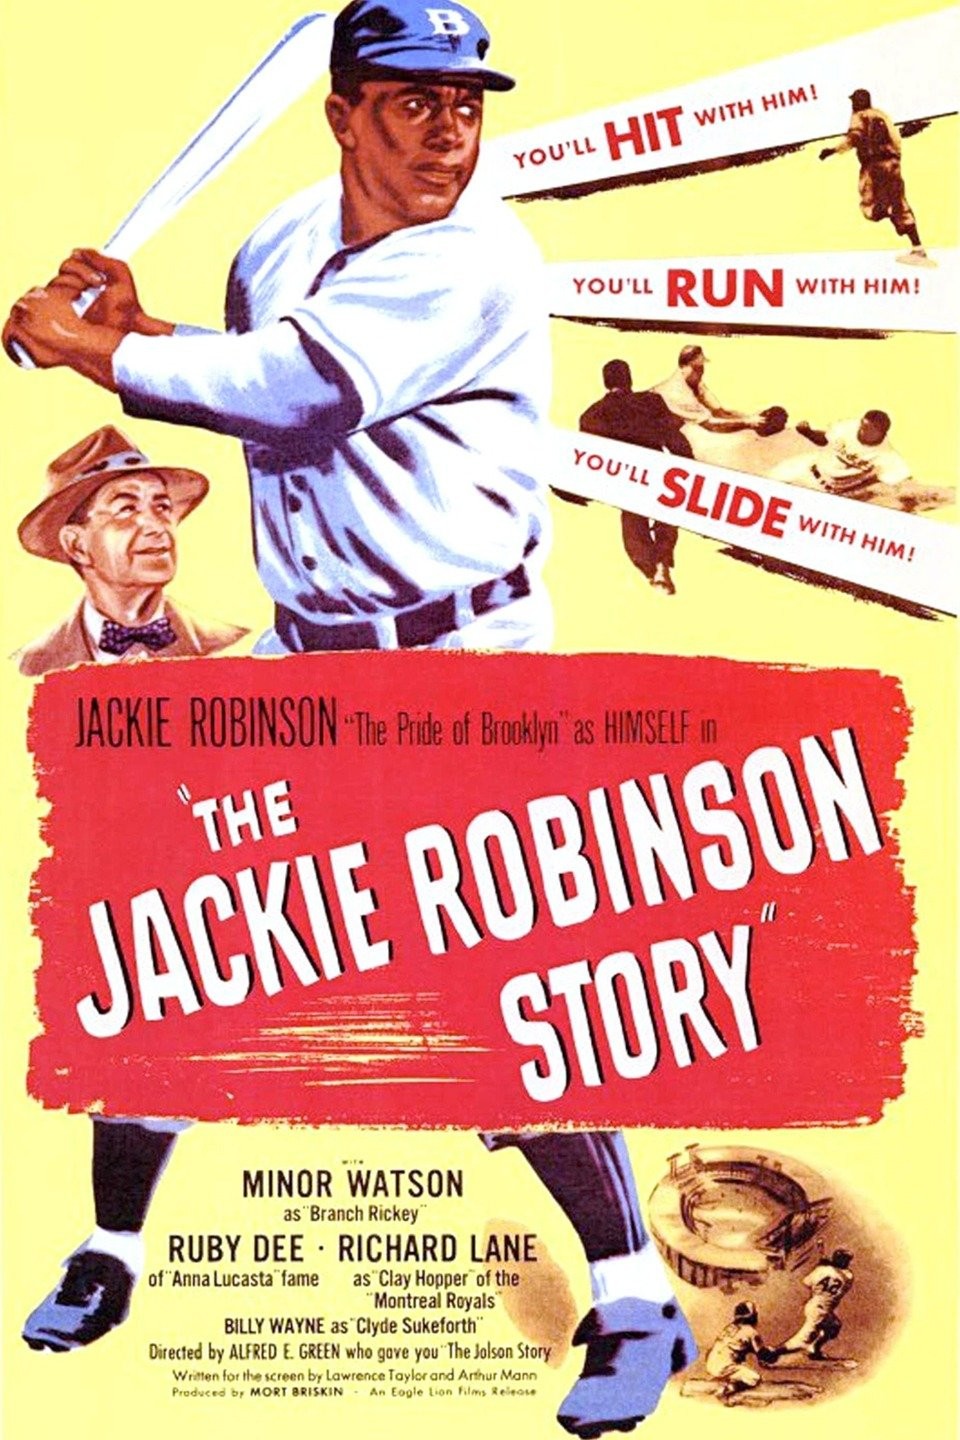 Jackie Robinson Art : r/baseball